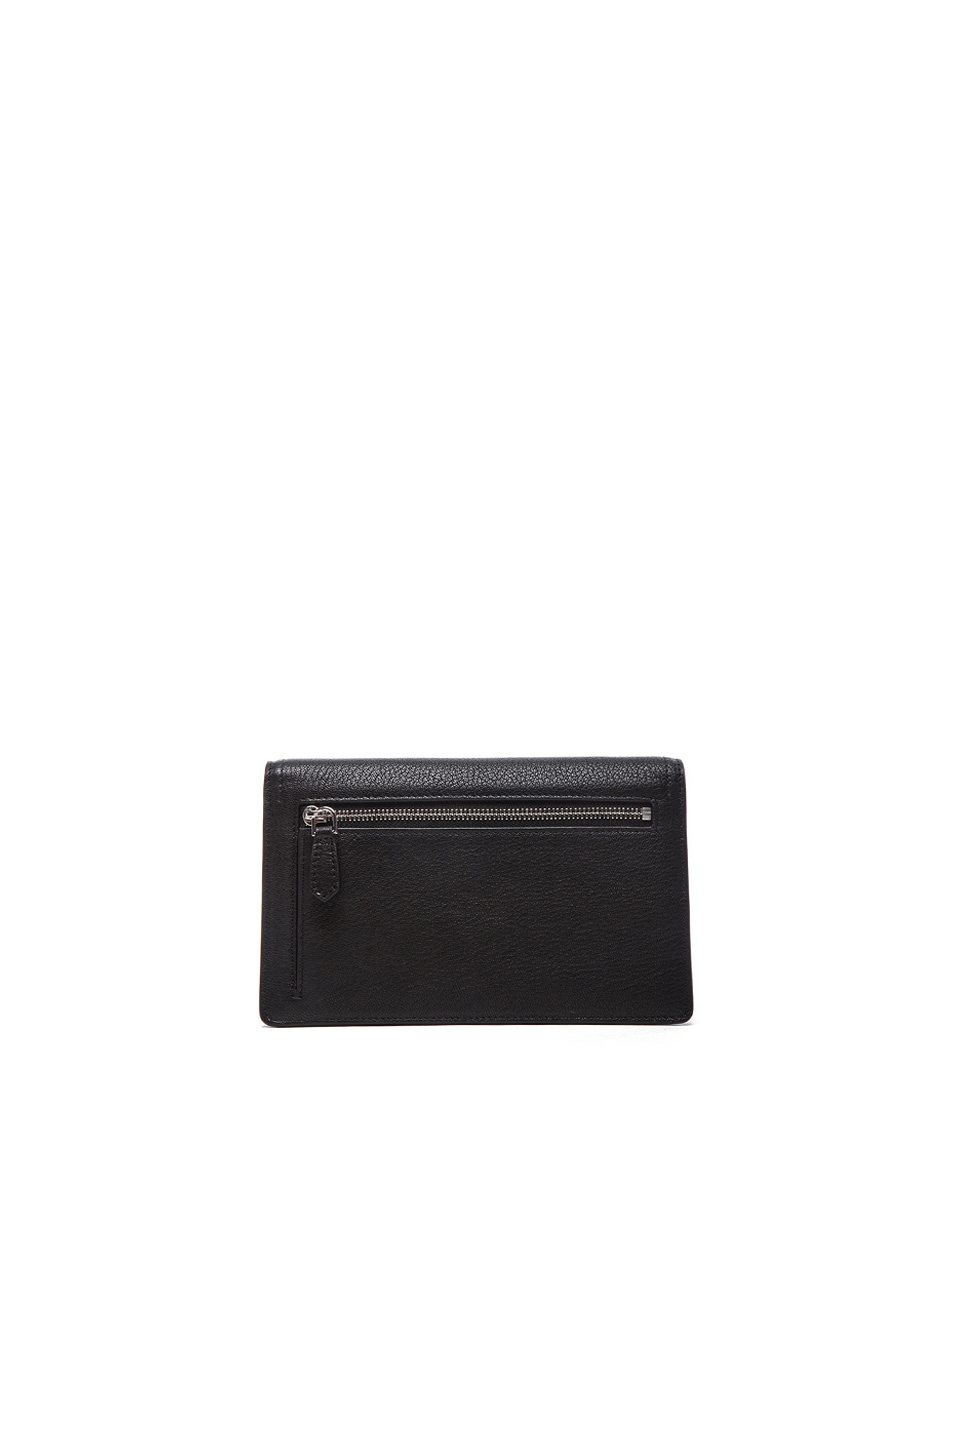 Givenchy Pandora Chain Wallet in Black | FWRD